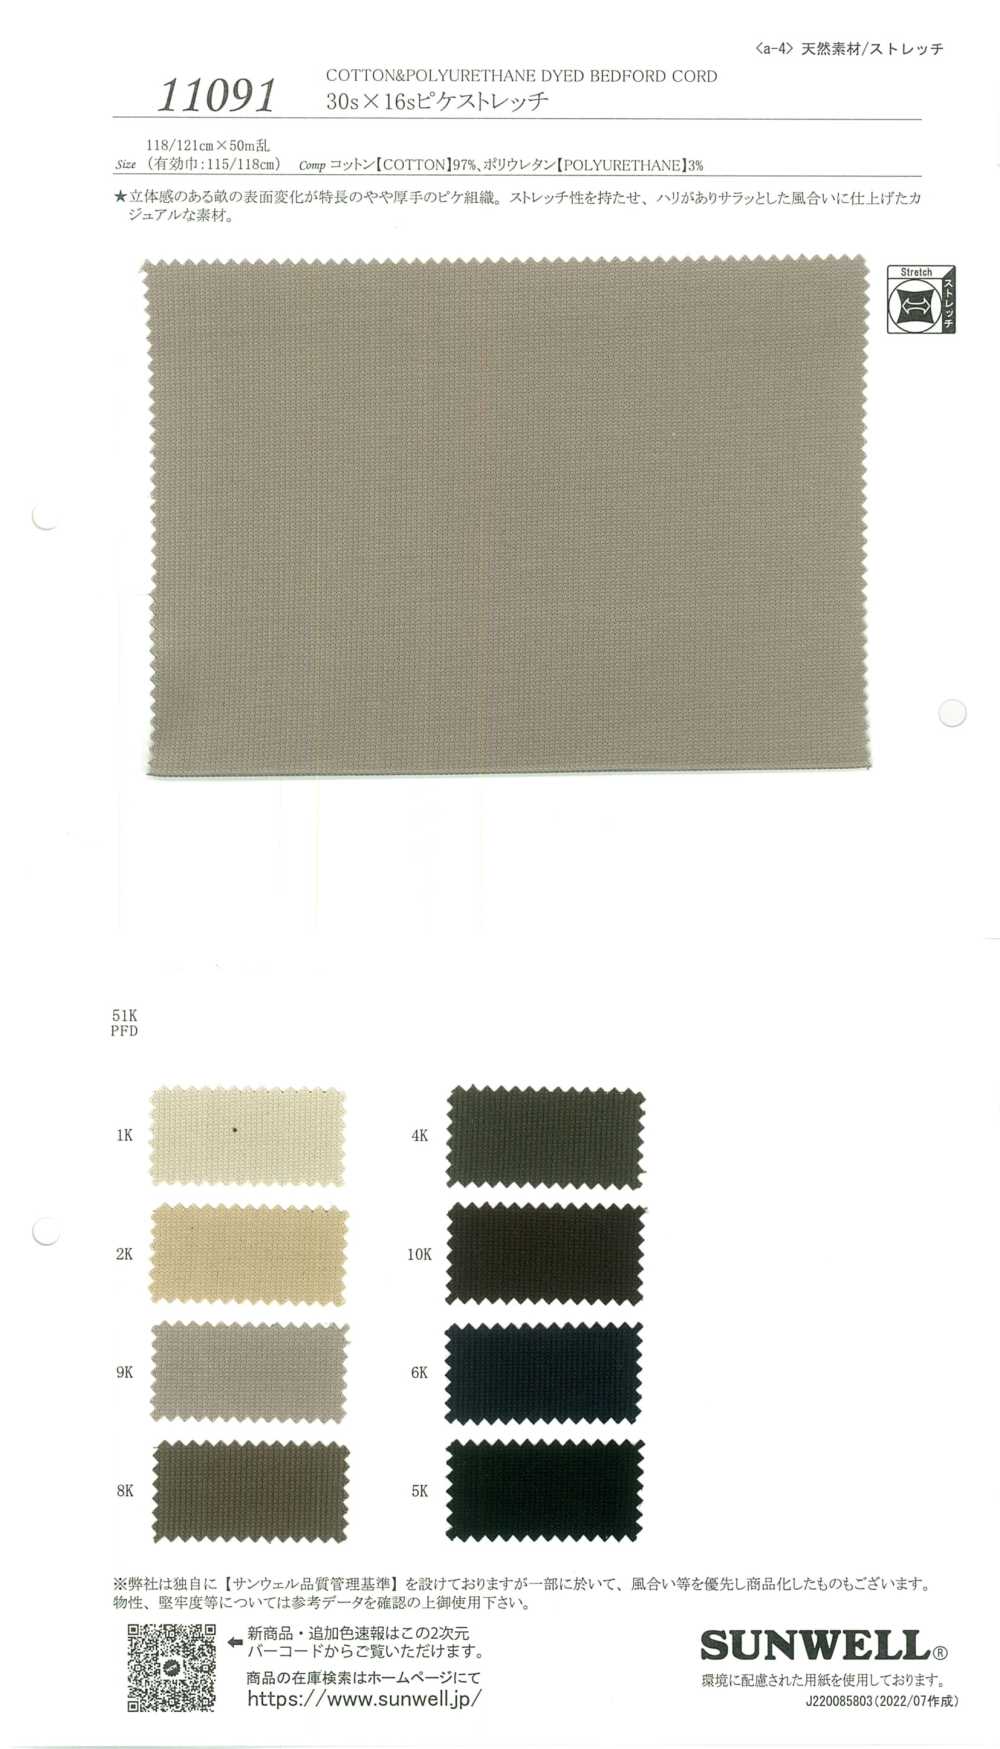 11091 30 Hilo Sencillo X 16 Hilo Sencillo Piqué Elástico[Fabrica Textil] SUNWELL